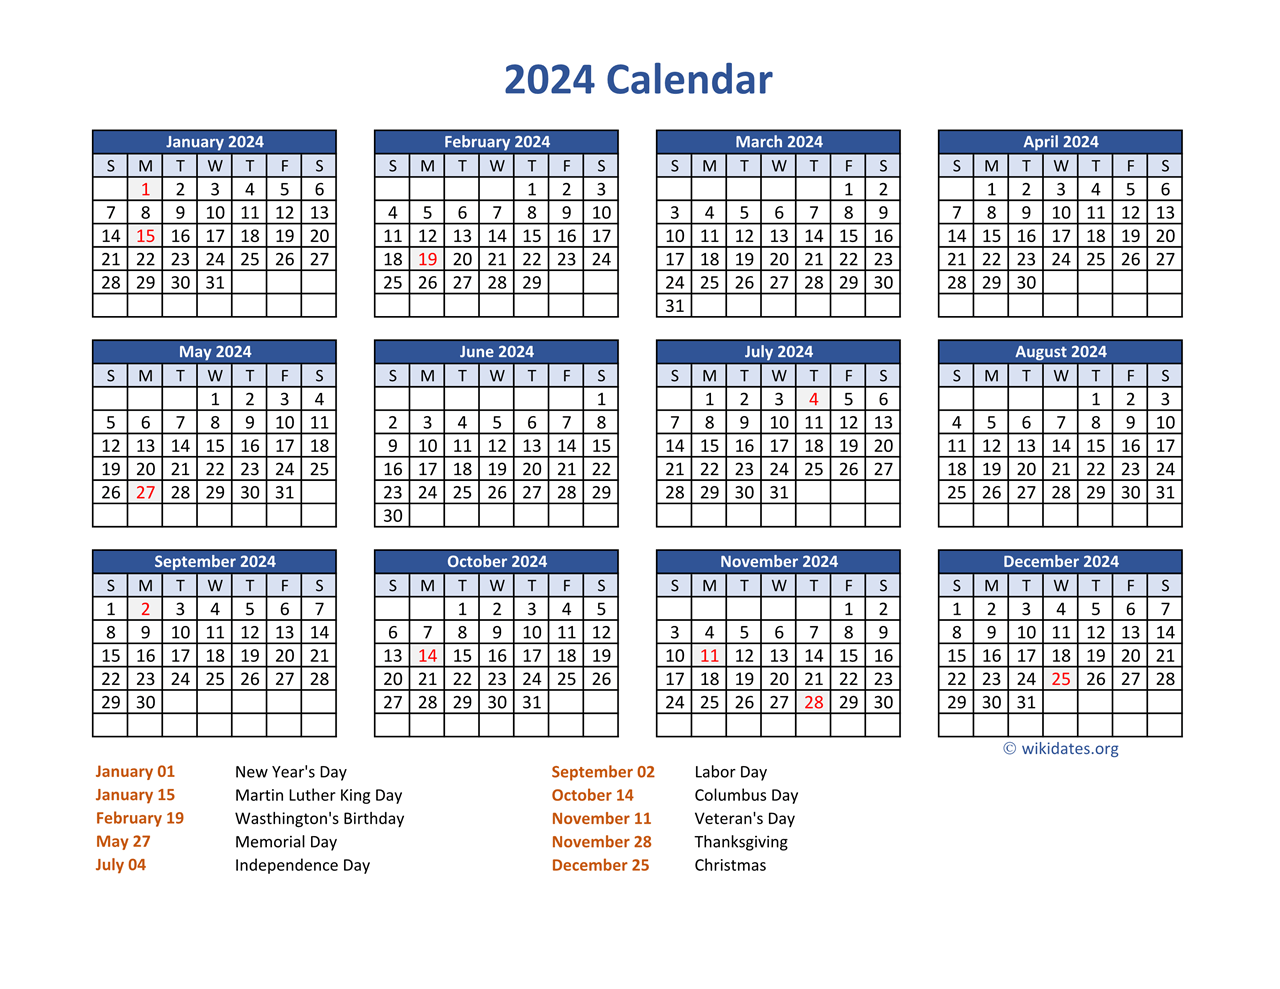 Pdf Calendar 2024 With Federal Holidays | Wikidates for 2024 Federal Holiday Calendar Printable